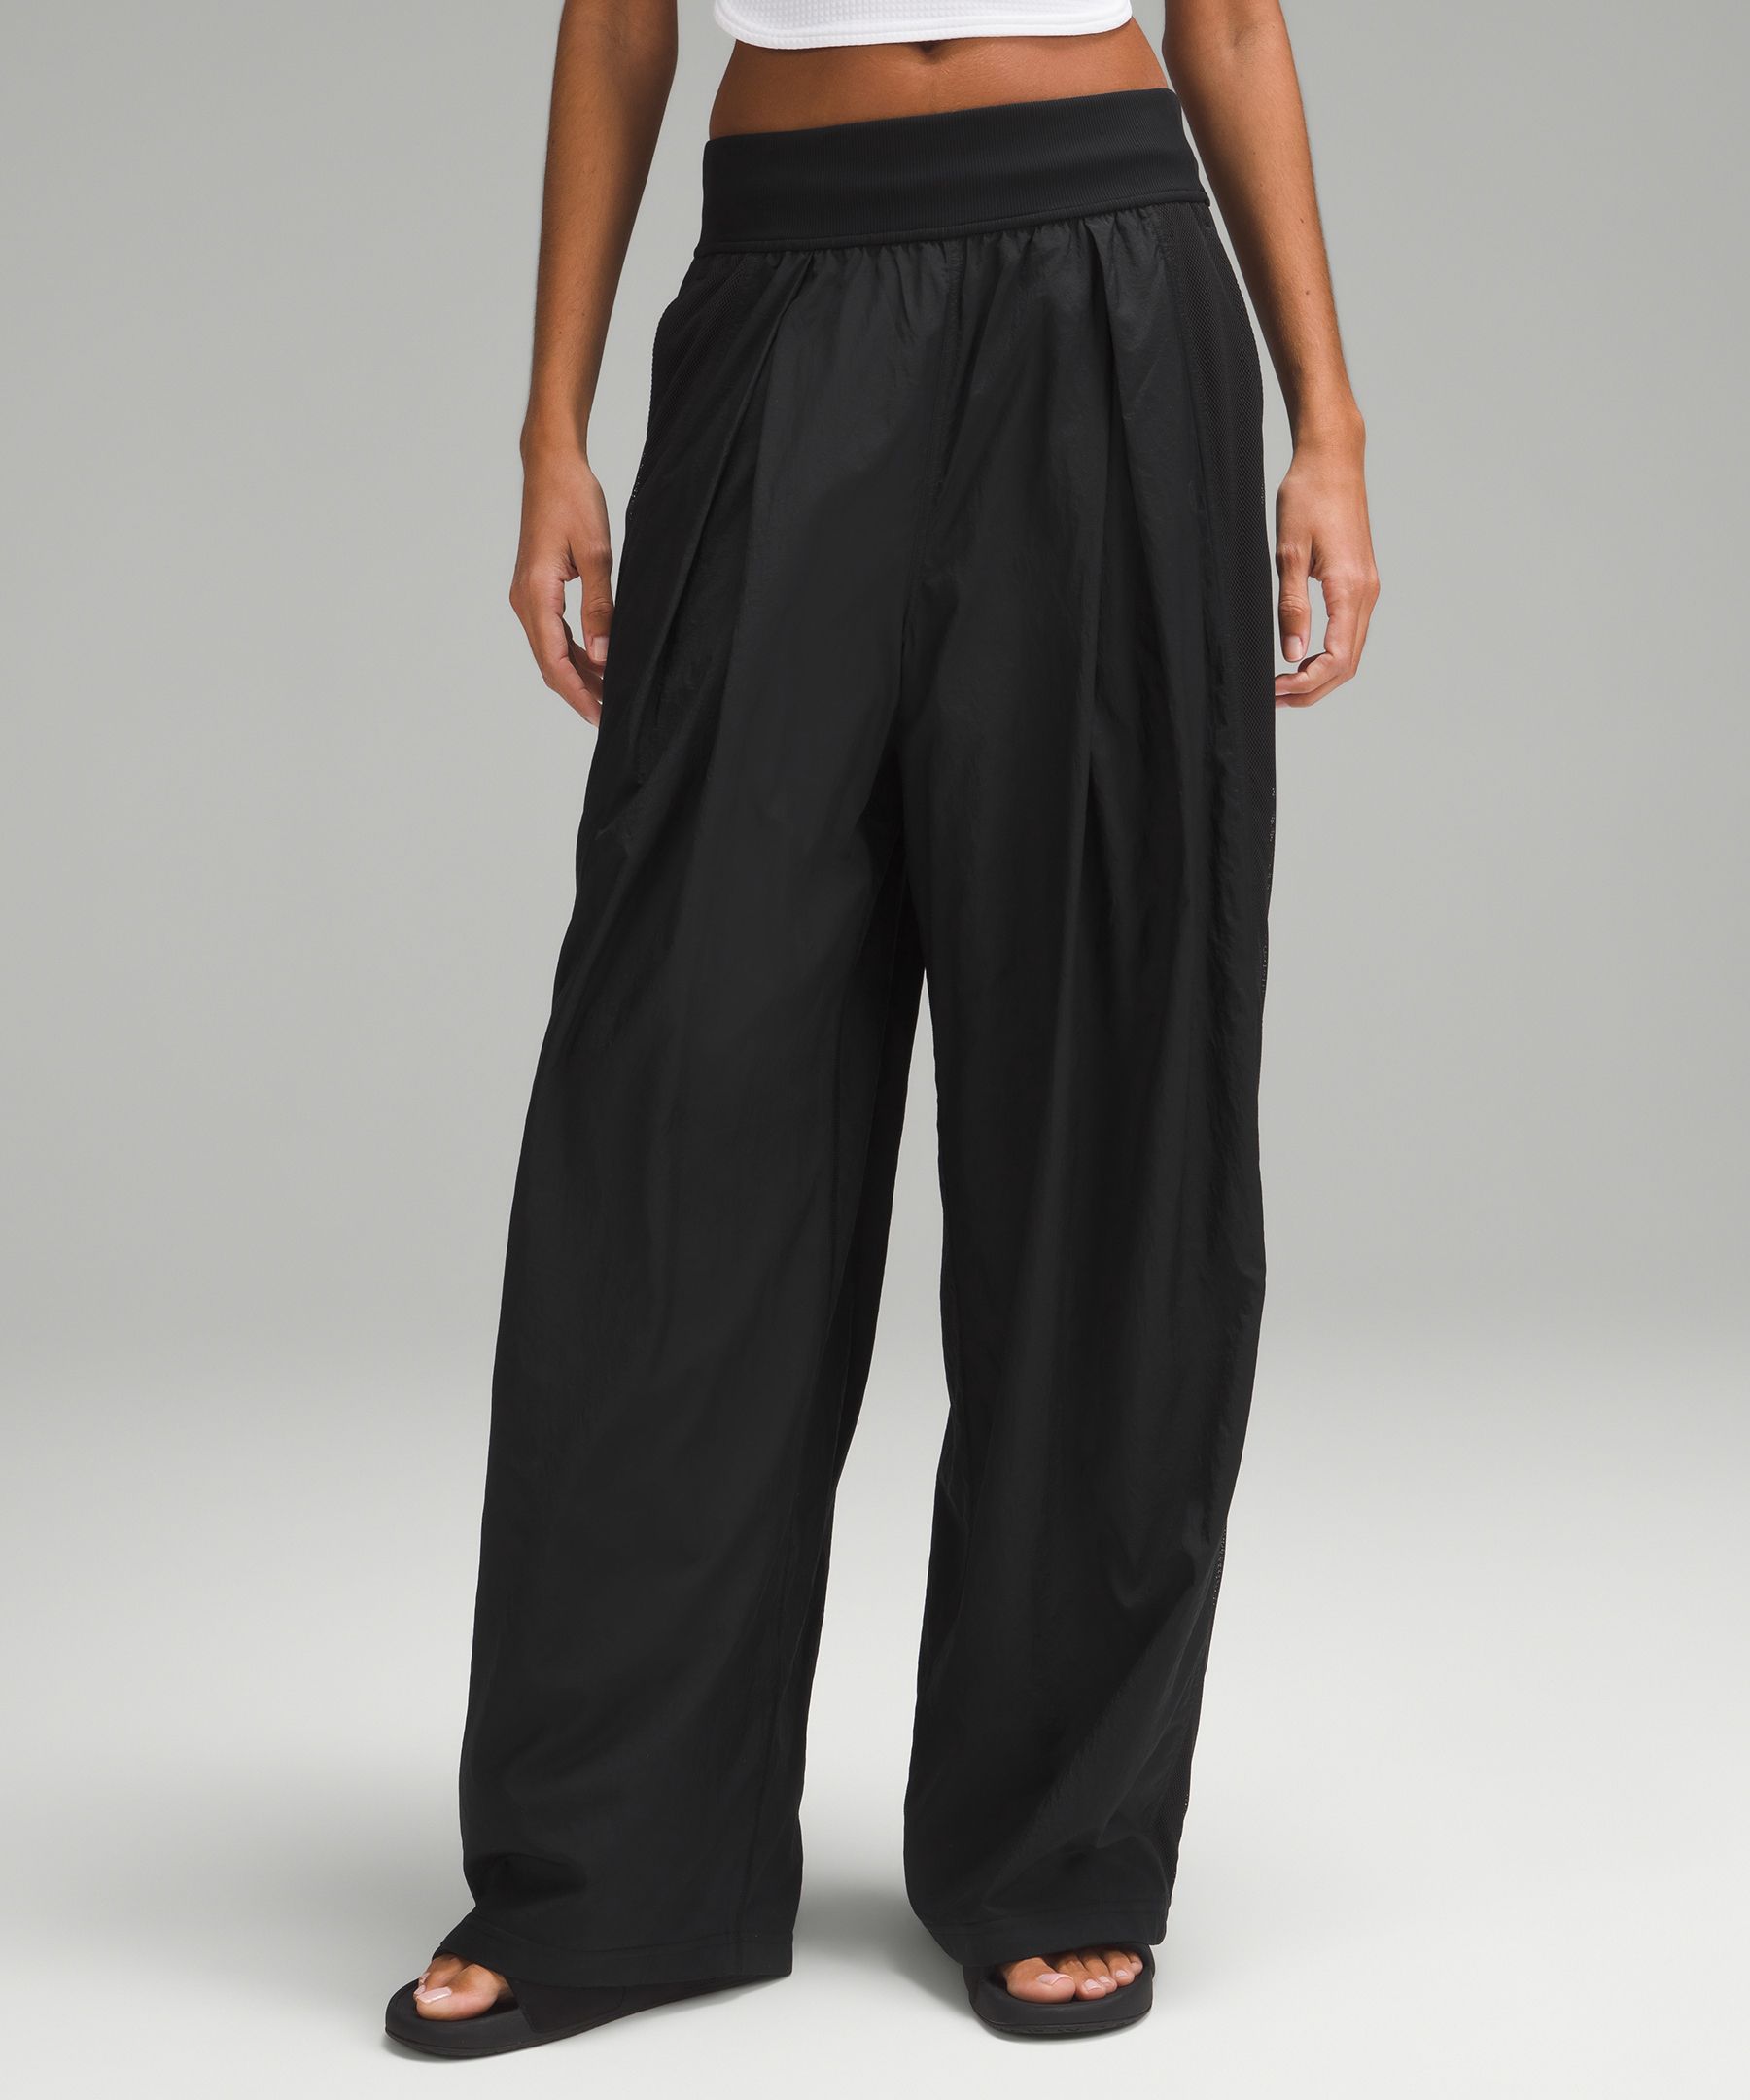 lululemon lululemon Lightweight Tennis Mid-Rise Track Pants *Full Length, Women's Pants